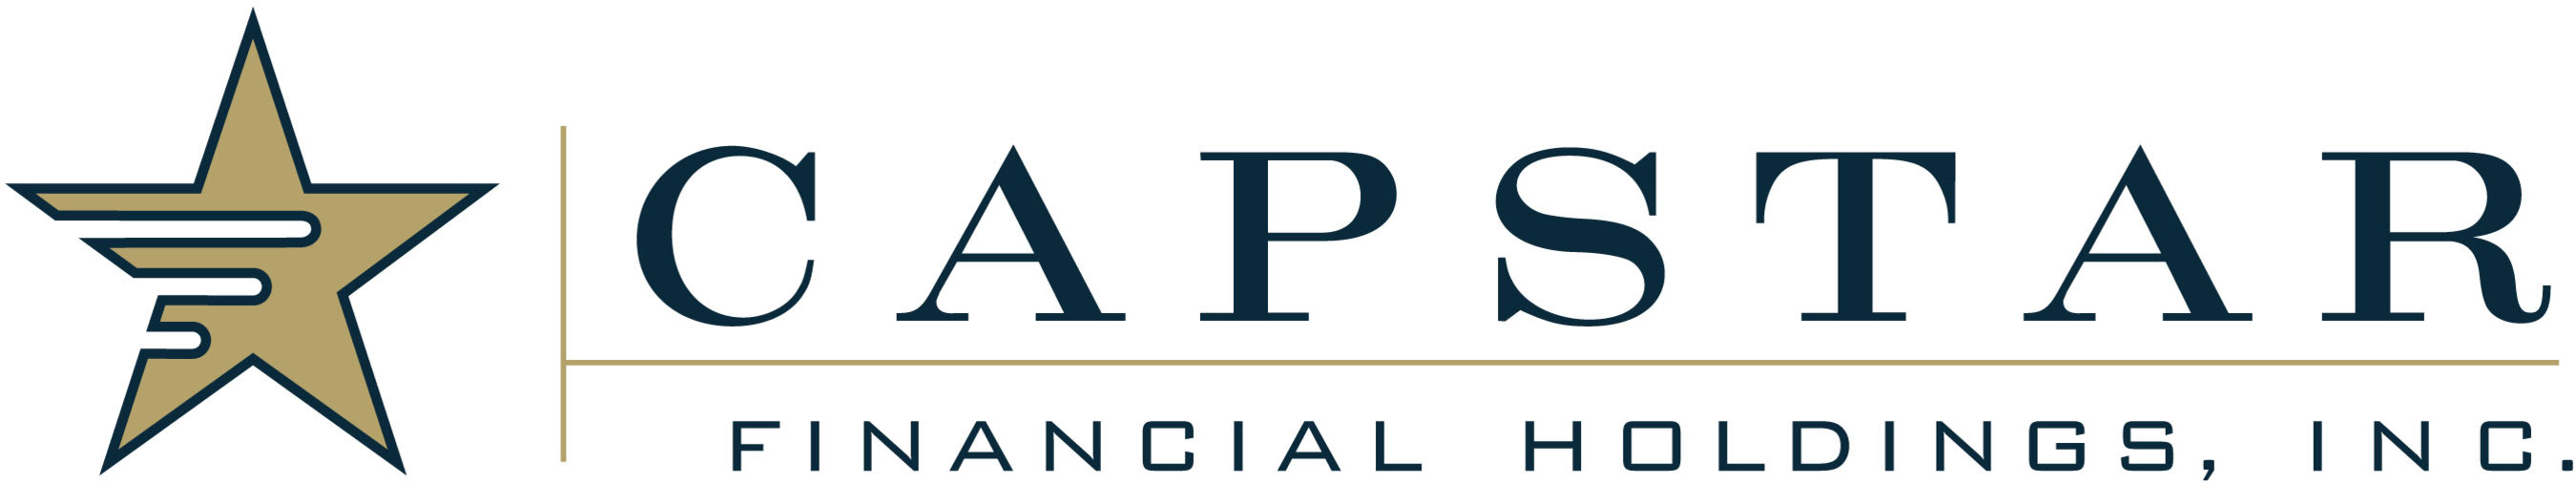 CapStar Financial Holdings, Inc. Logo (PRNewsFoto/CapStar Financial Holdings, Inc.)